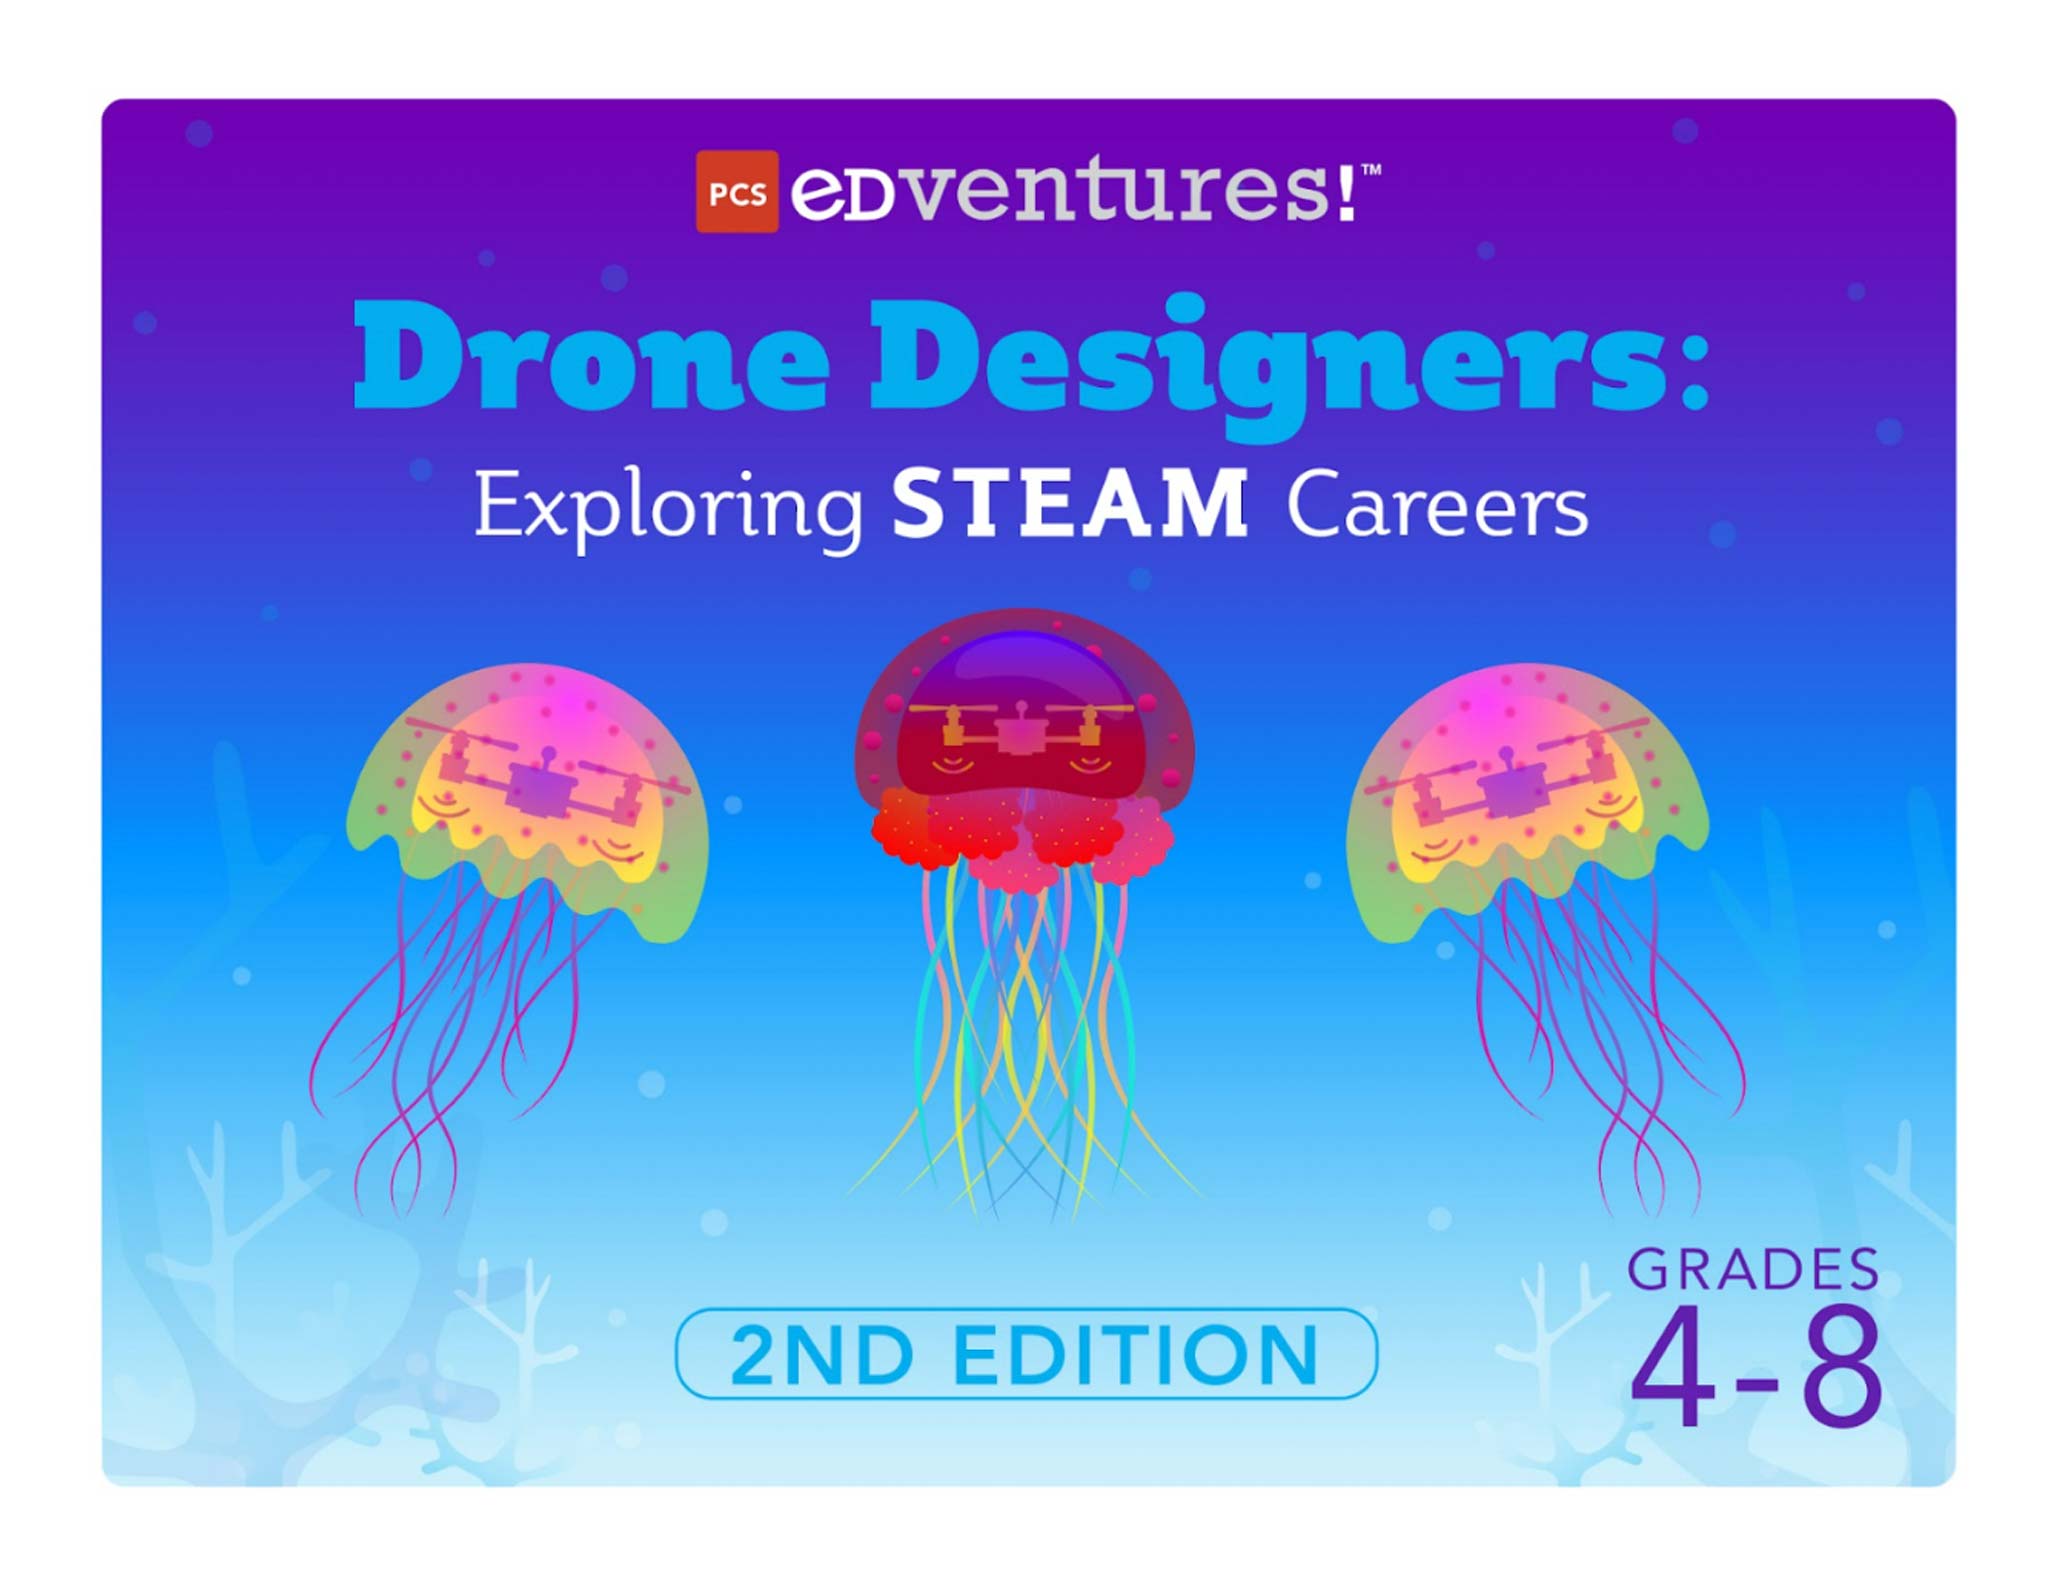 Drone Designers: Exploring STEAM Careers